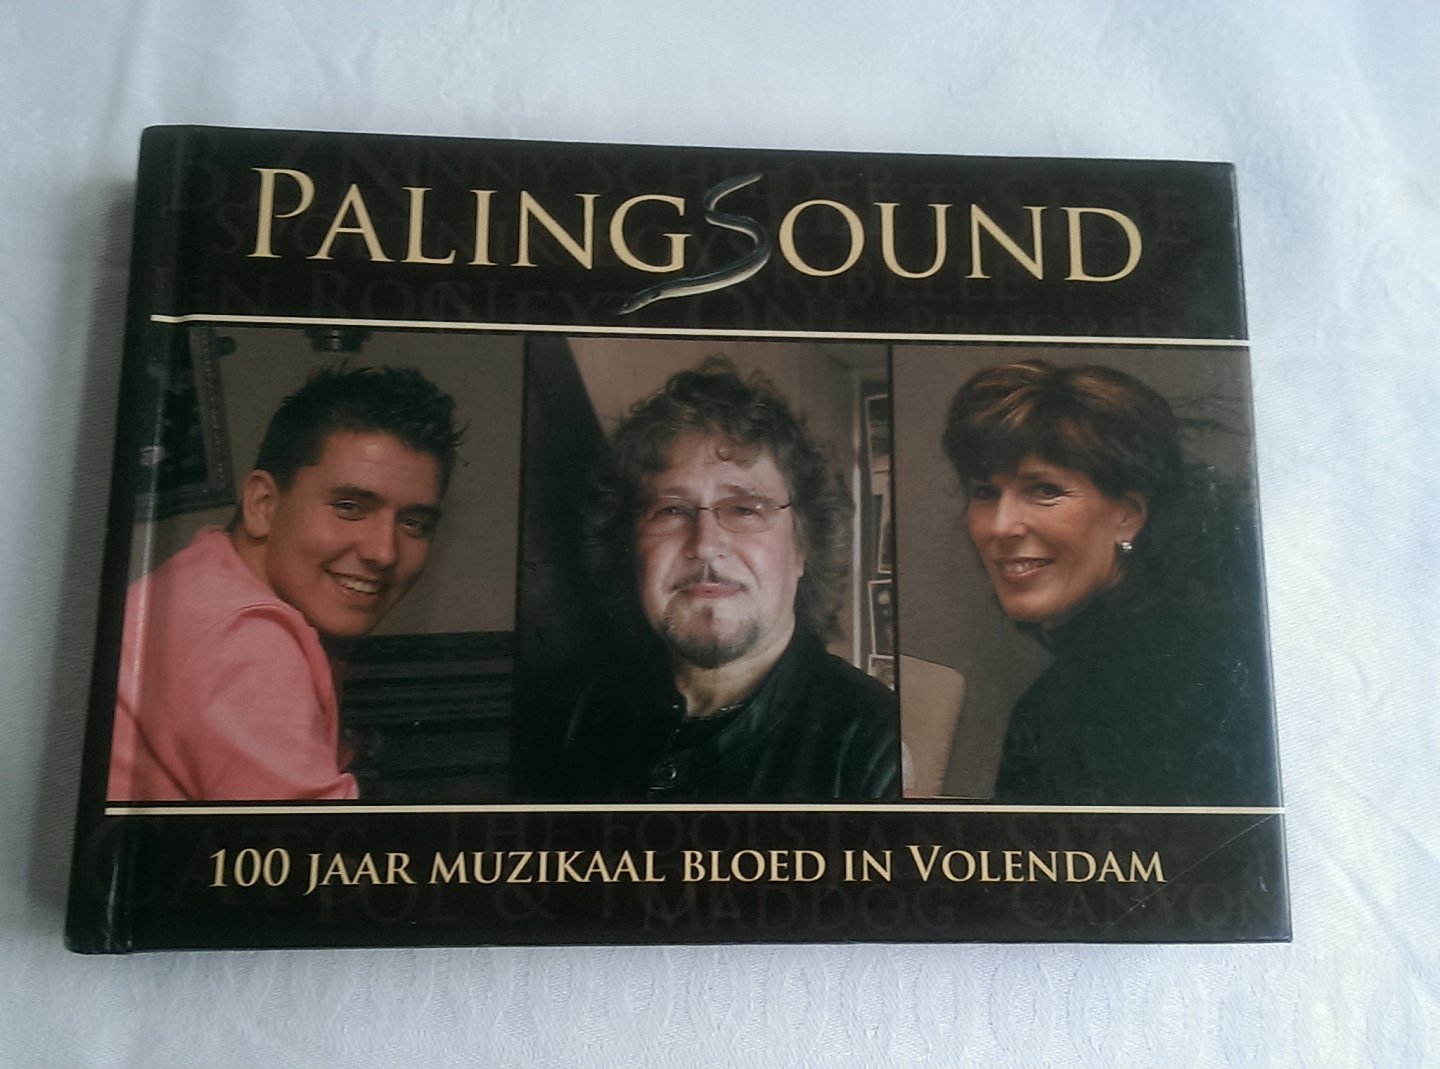 Boer, Dick de - Palingsound / 100 jaar muzikaal bloed in Volendam